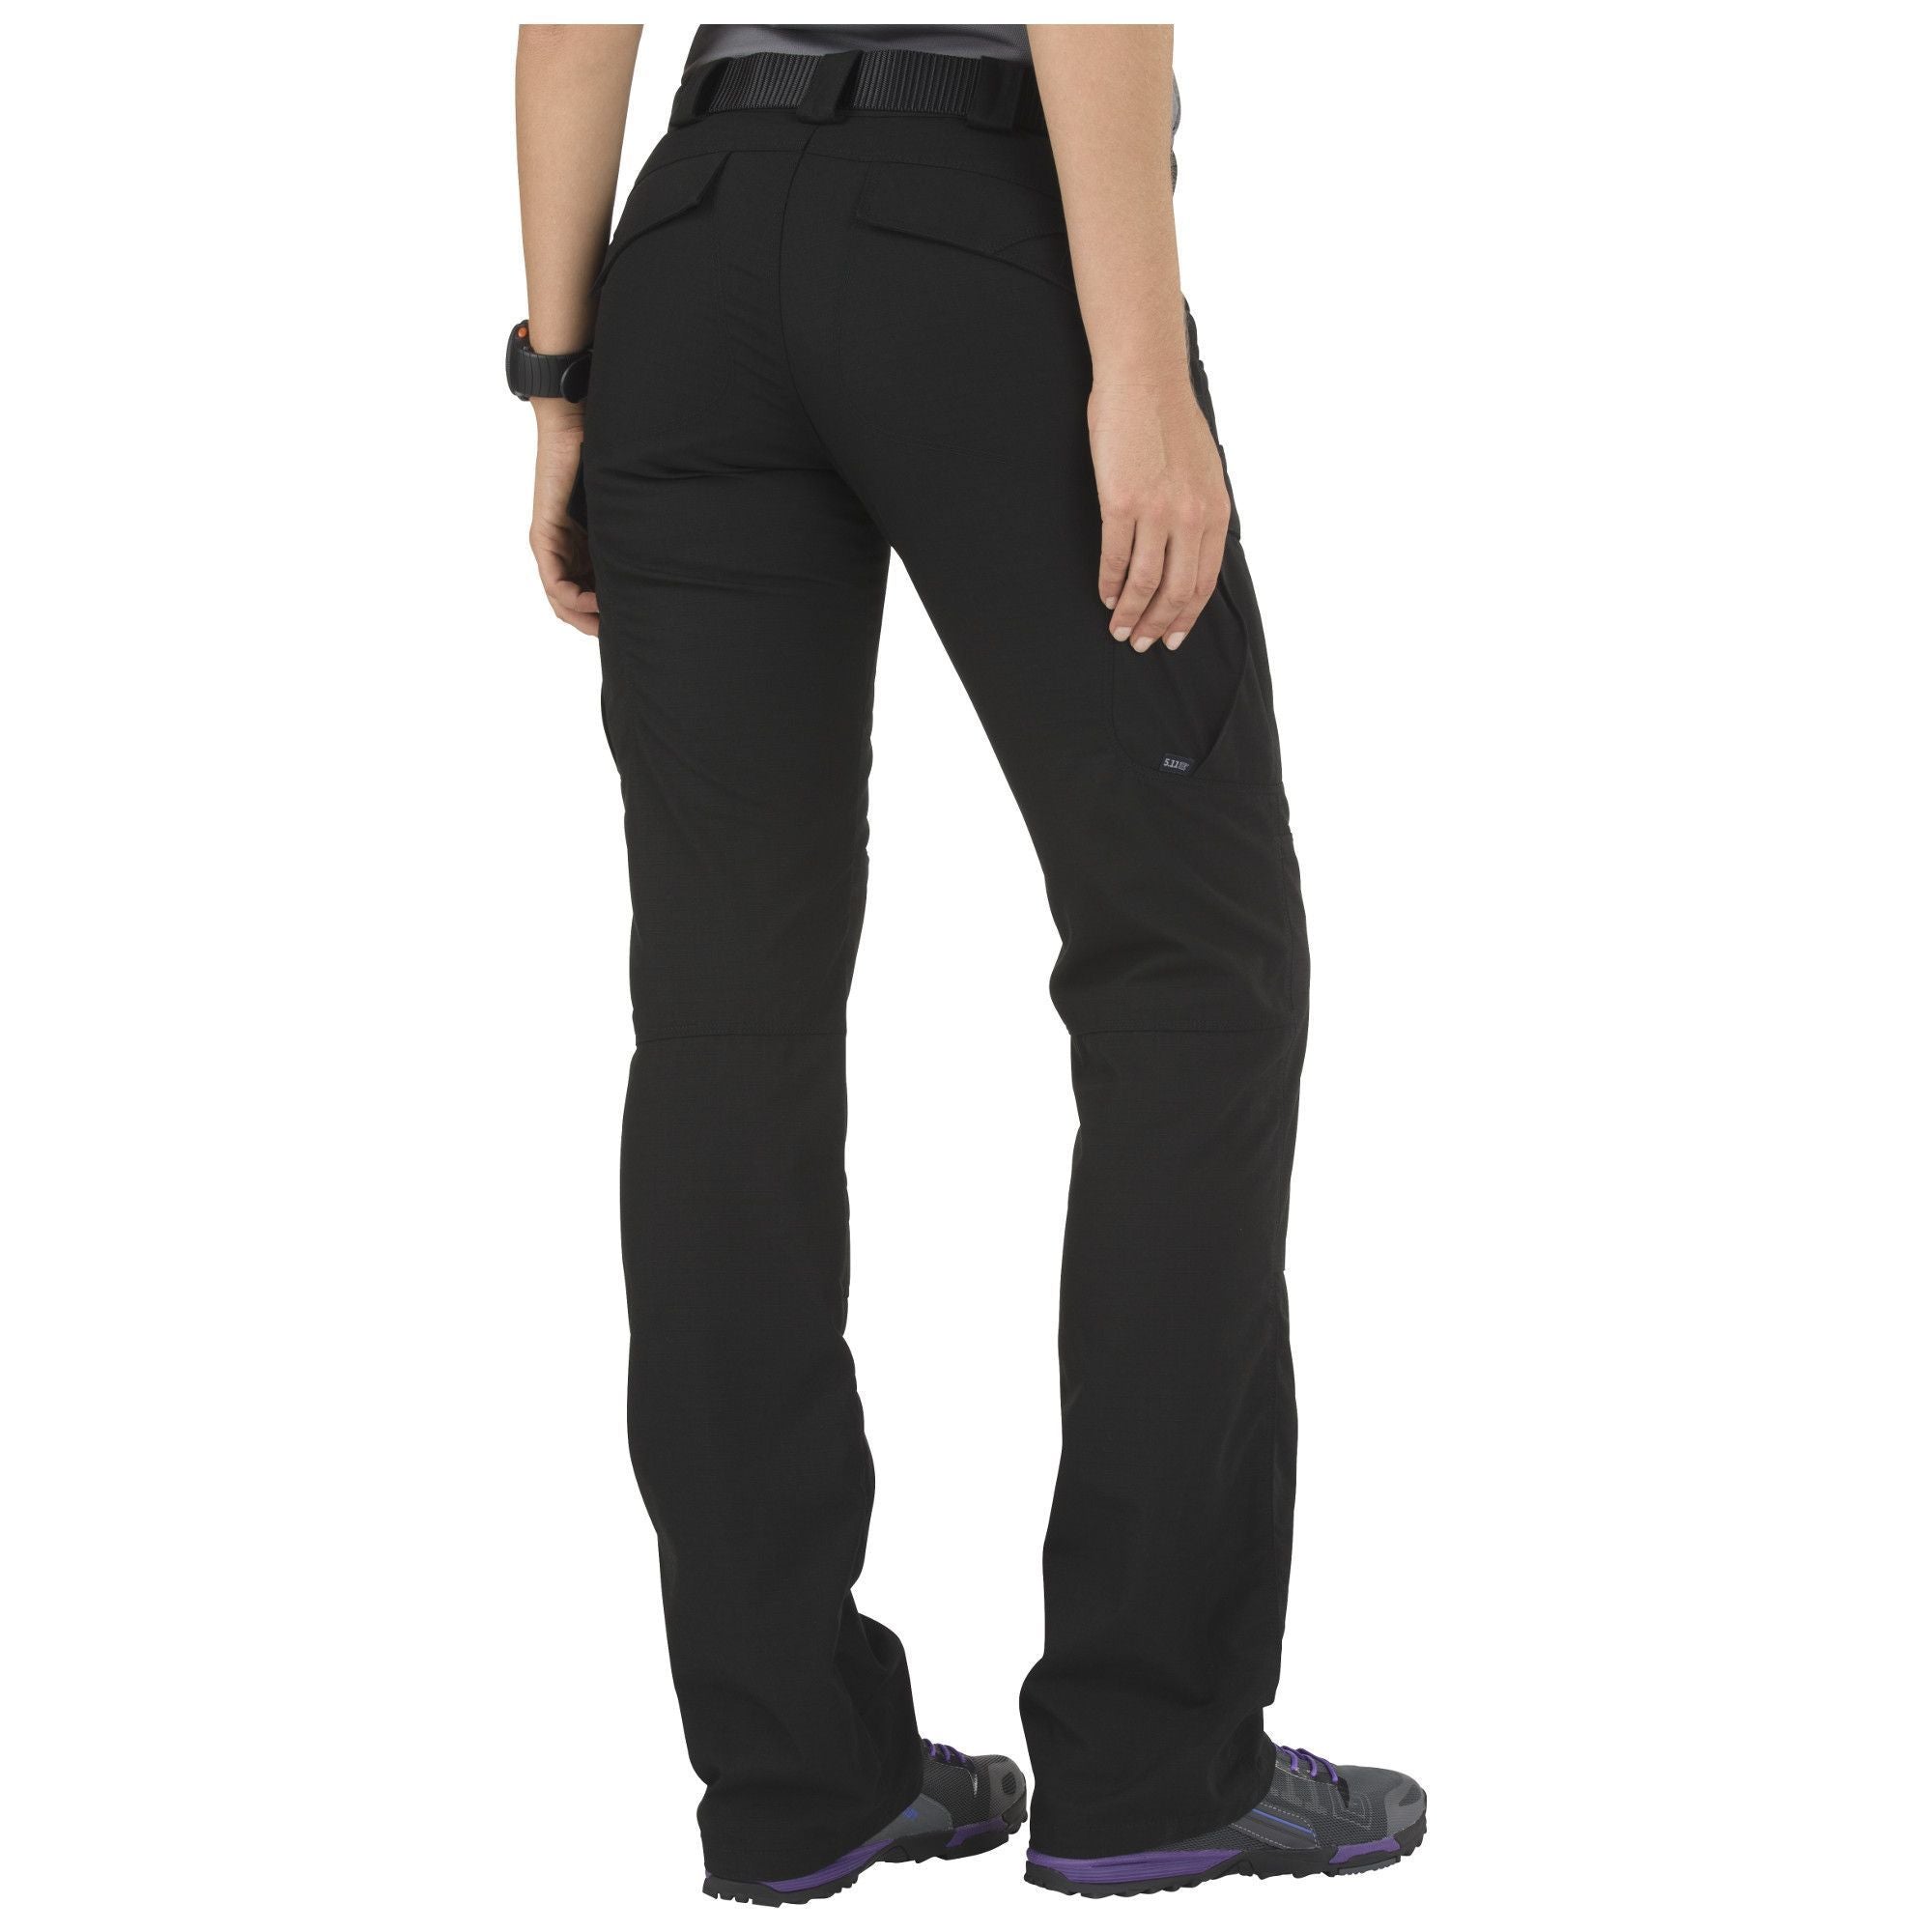 5.11 Women's Stryke Pant Black Pants 5.11 Tactical Tactical Gear Supplier Tactical Distributors Australia